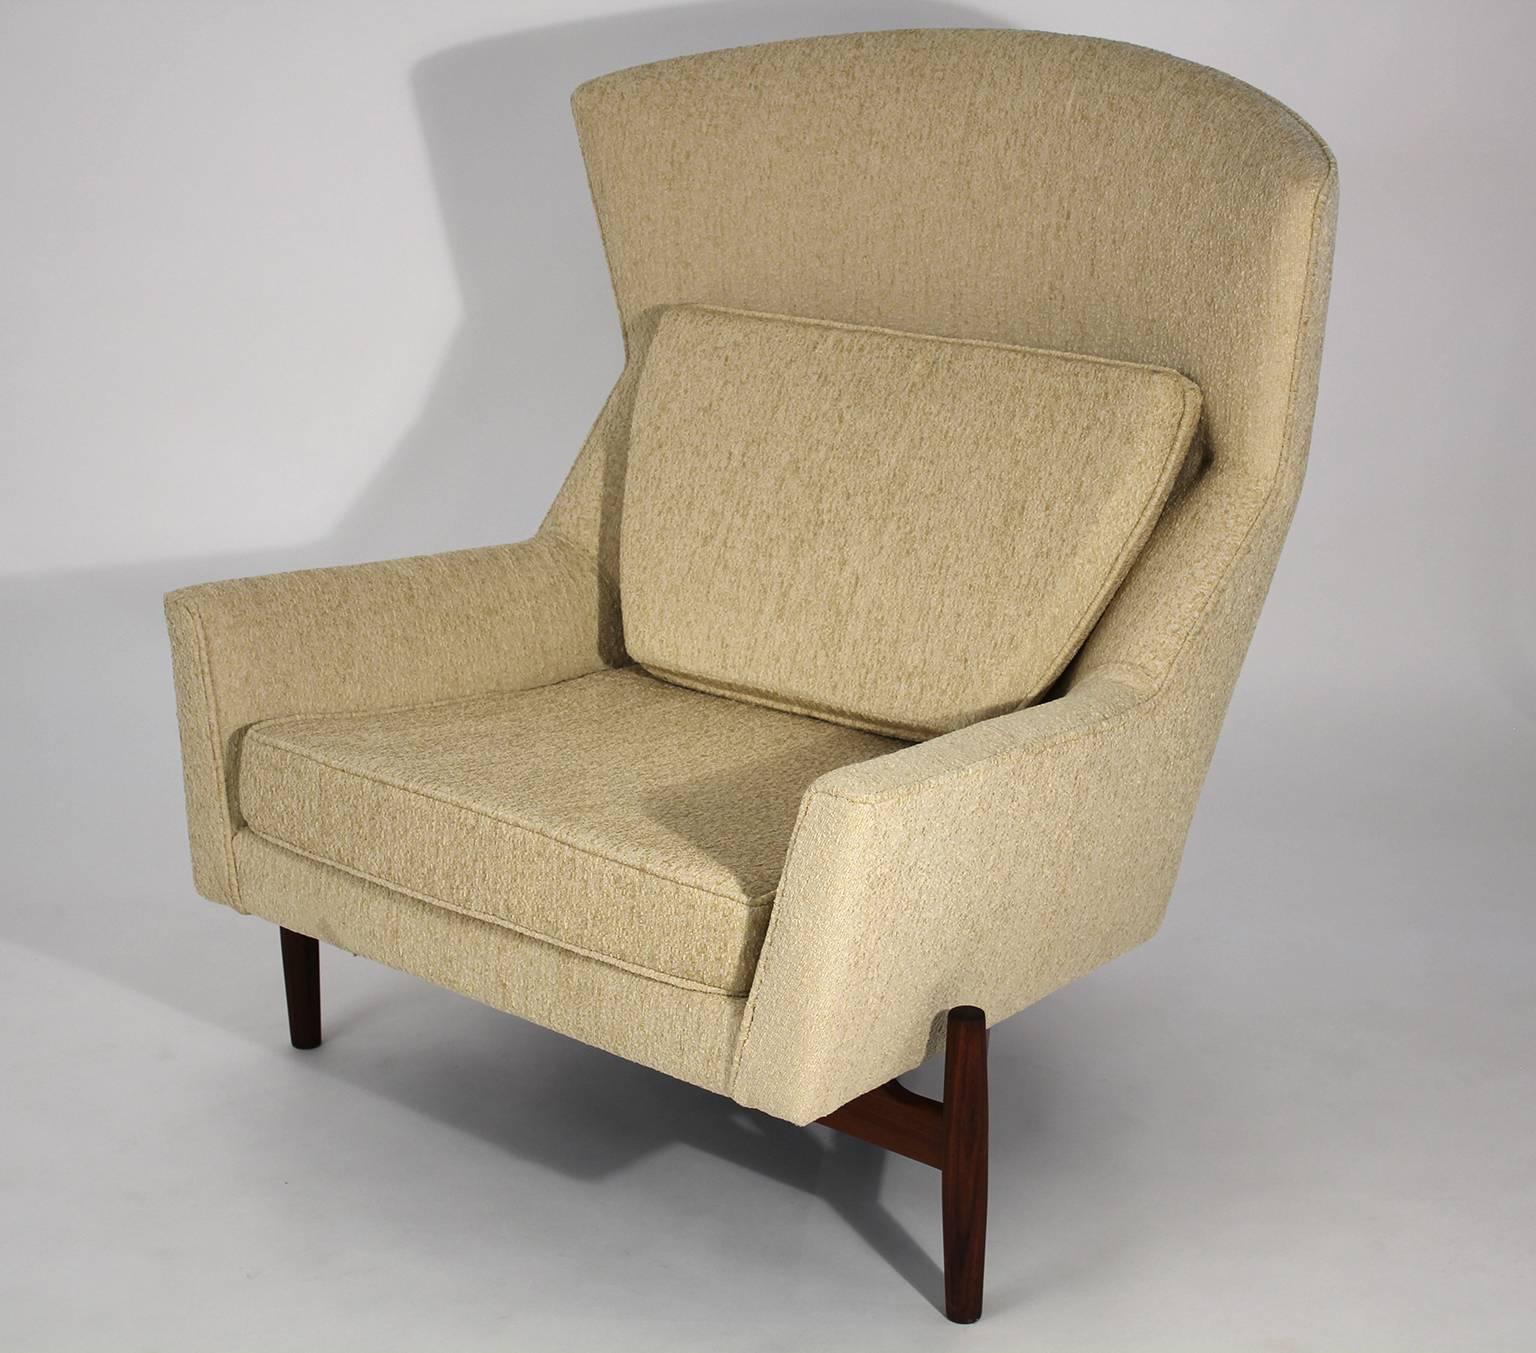 American Large Modernist Jens Risom Lounge Chair